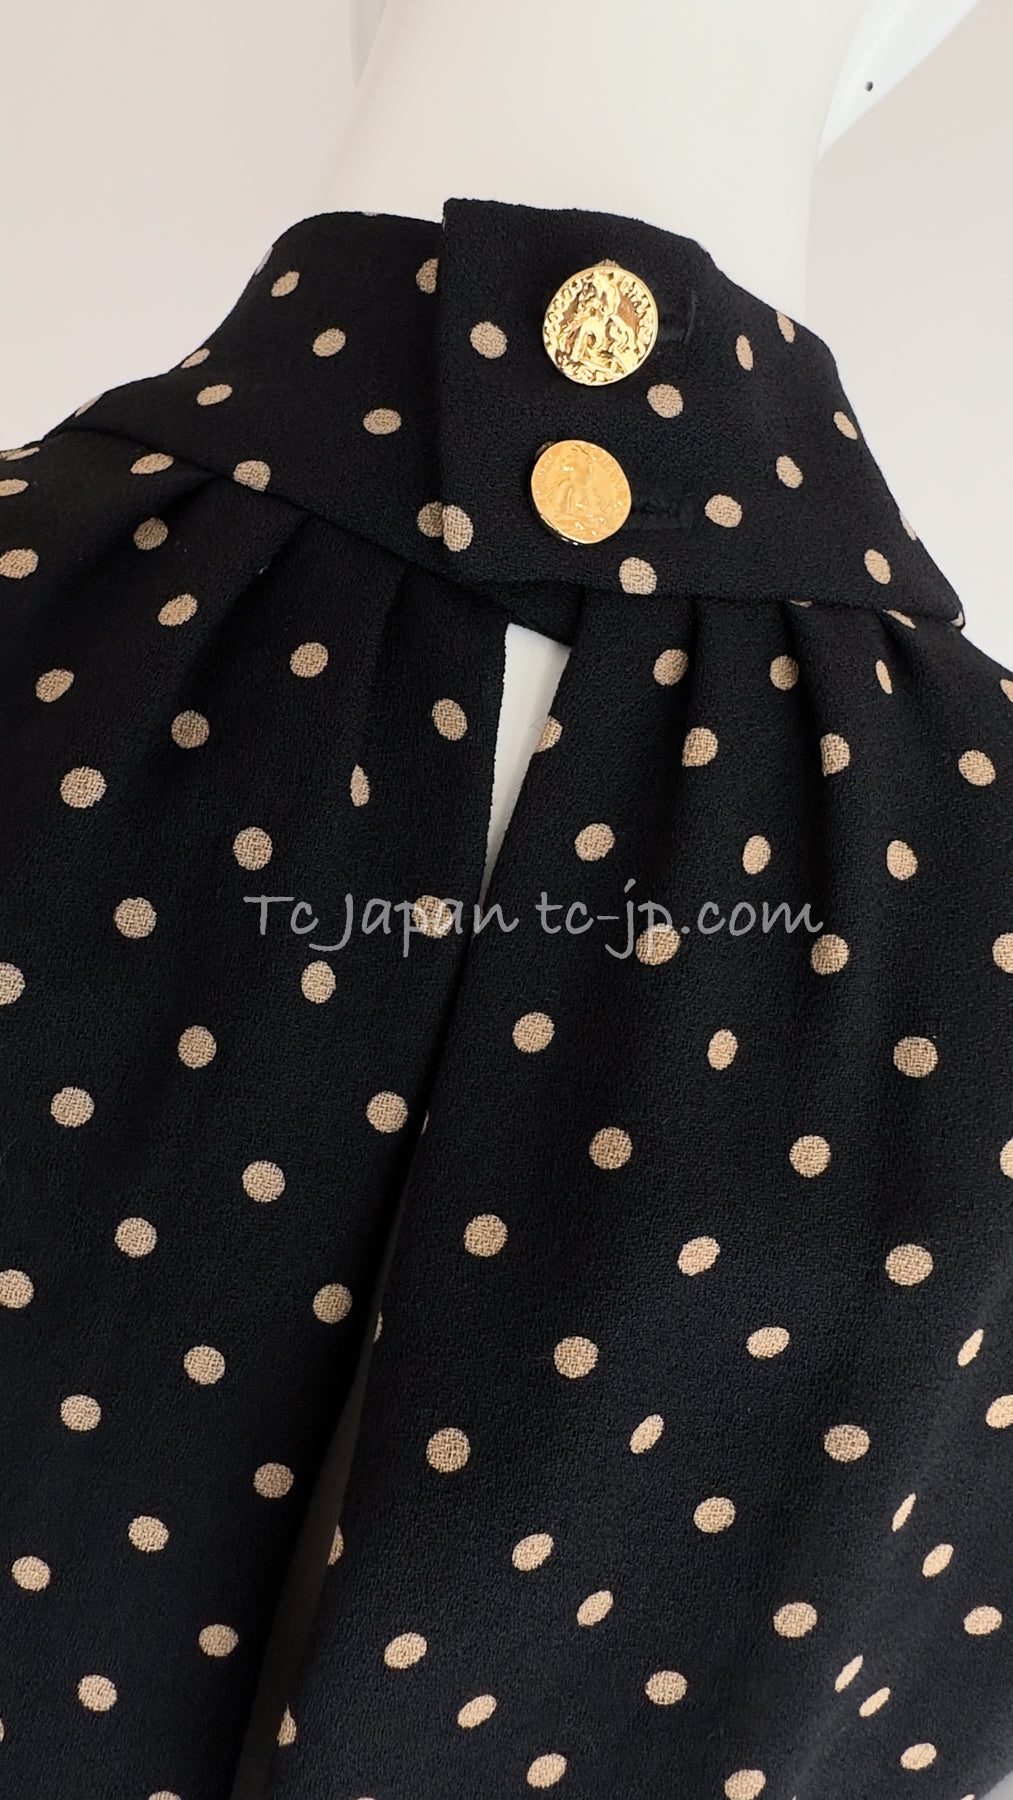 CHANEL 89S Black Beige Dot Print Dress 34 36 シャネル ブラック・ベージュ・ドット柄・ワンピース 即発